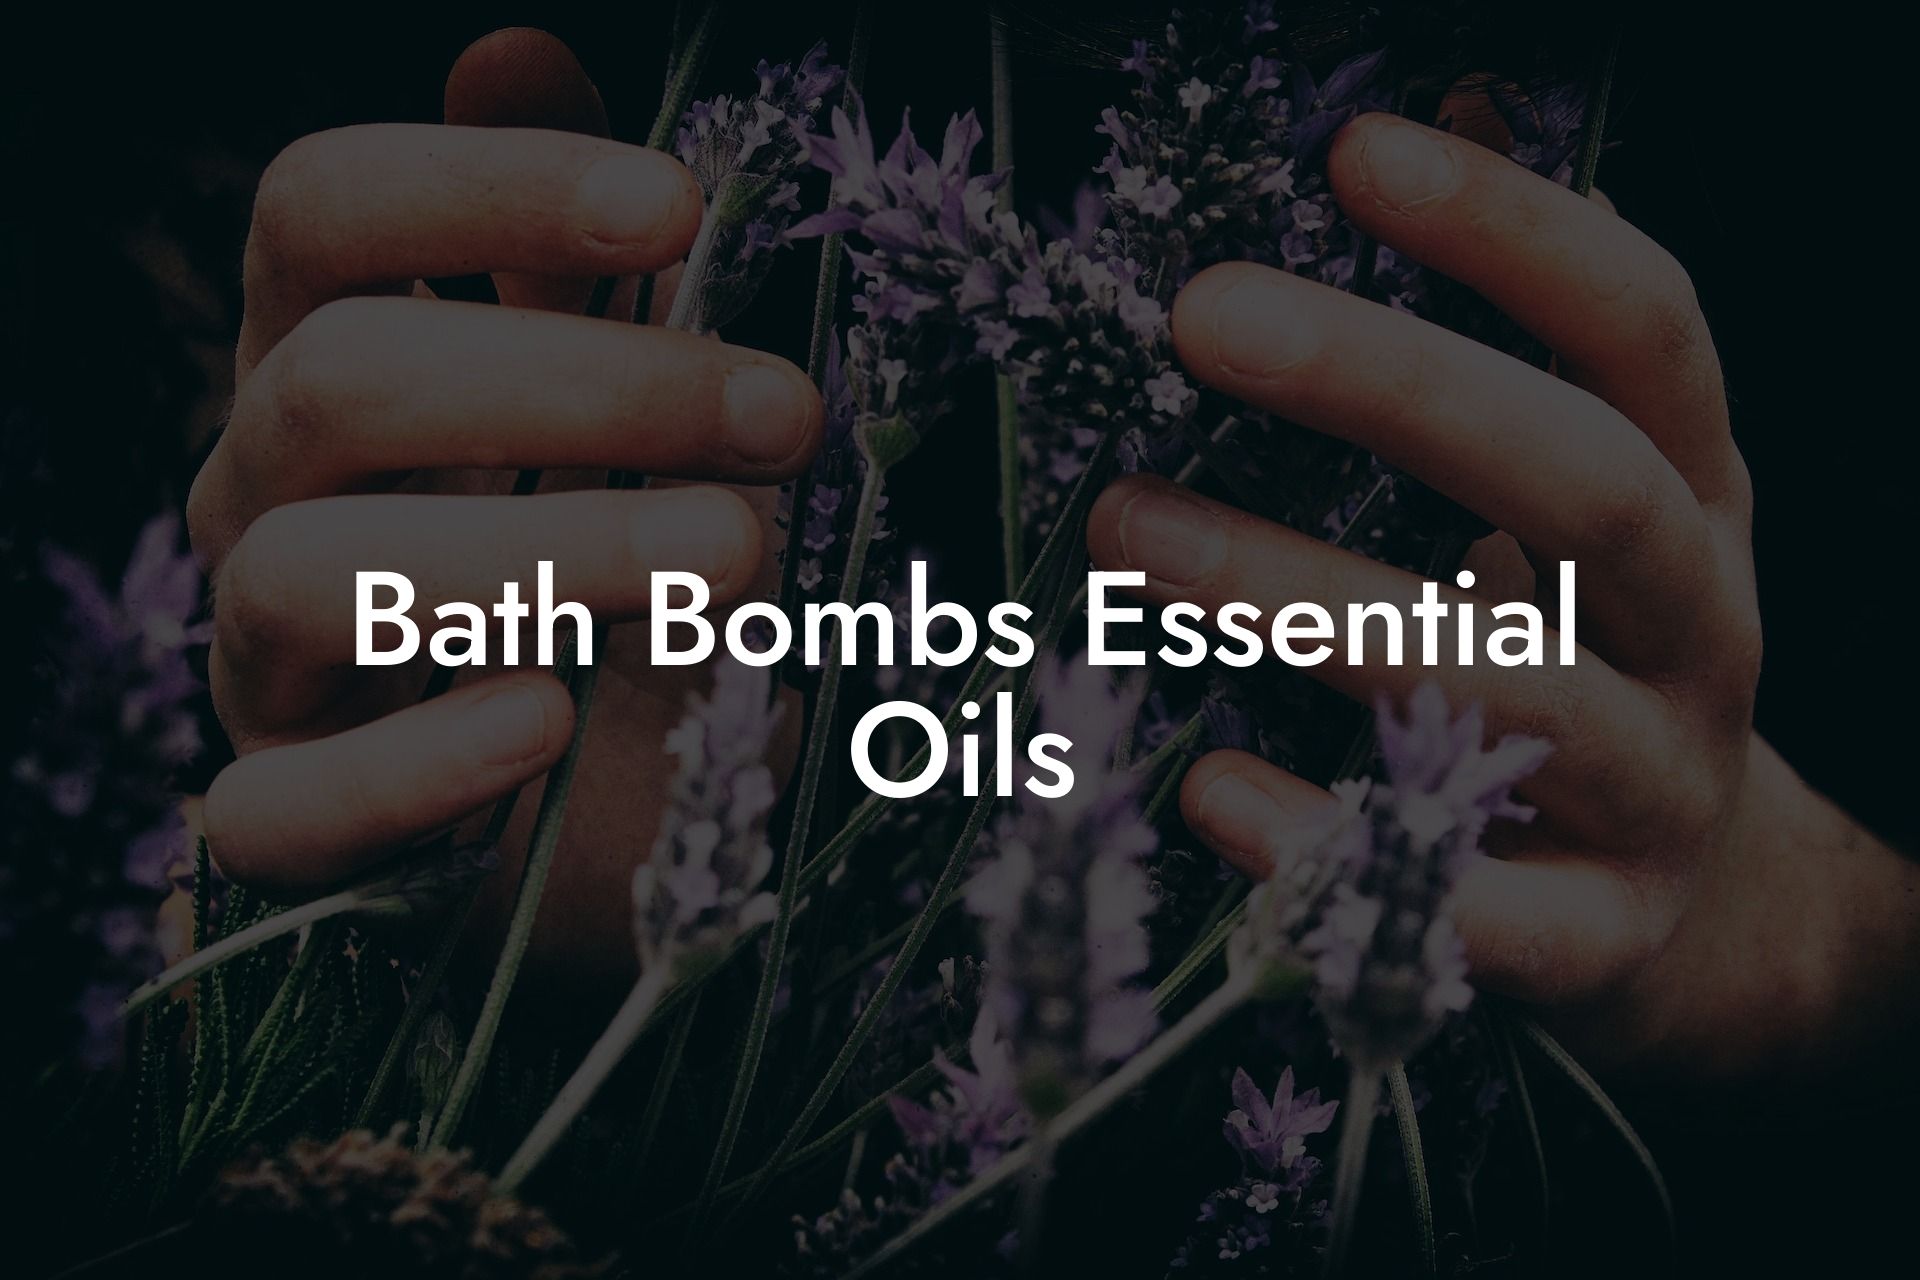 Bath Bombs Essential Oils